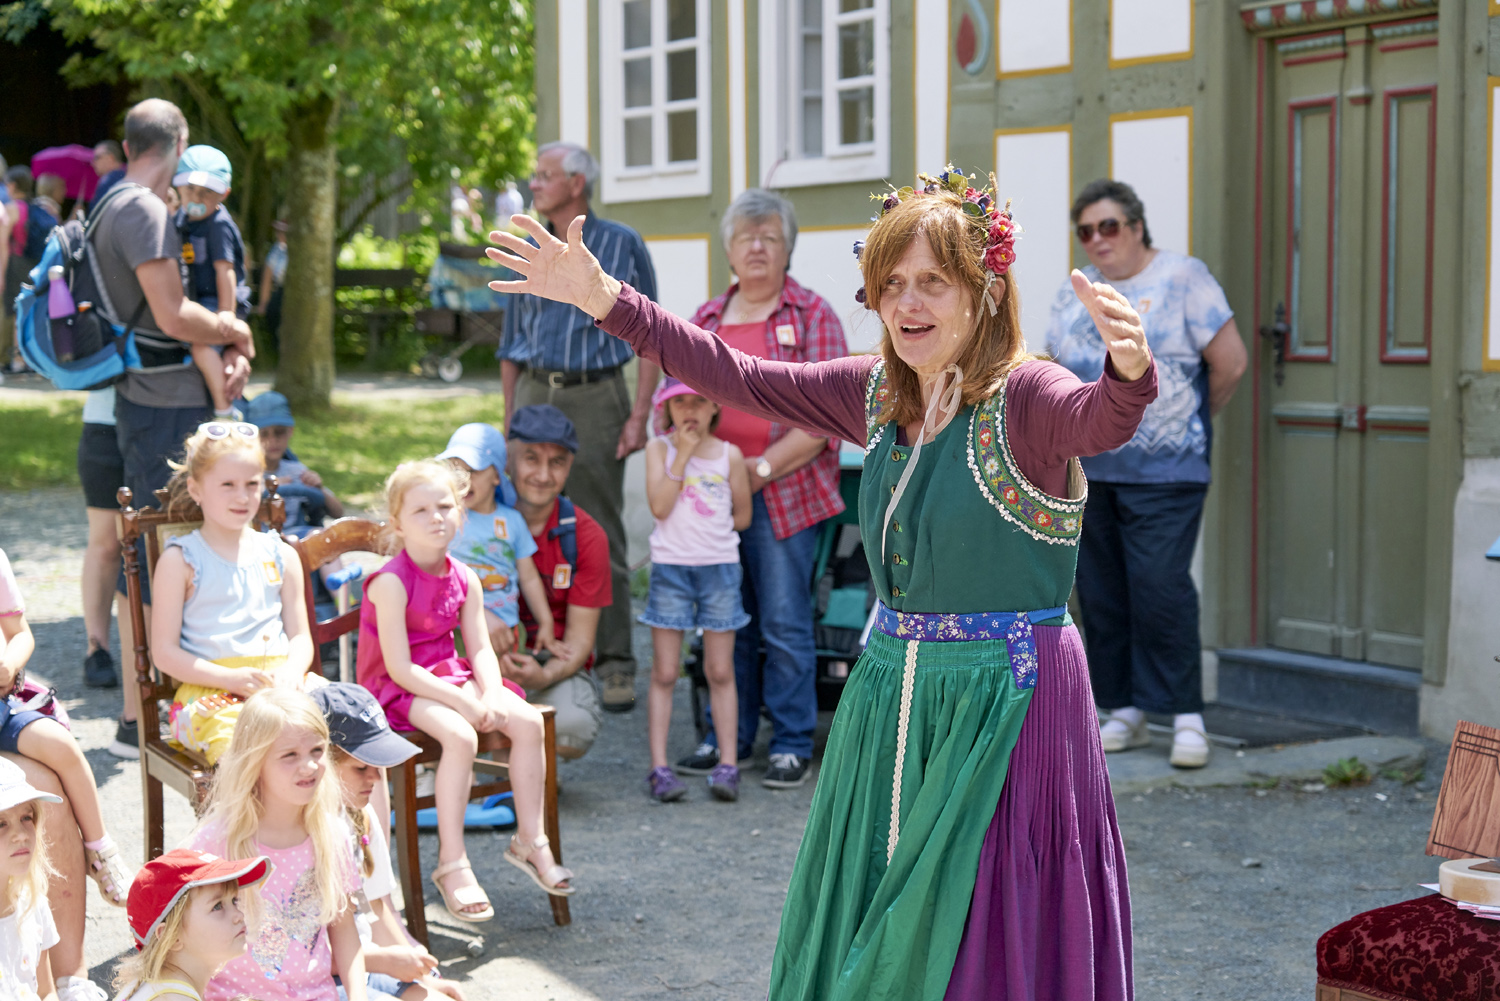 Veranstaltungsfoto Märchentag, Märchenerzählerin in Aktion